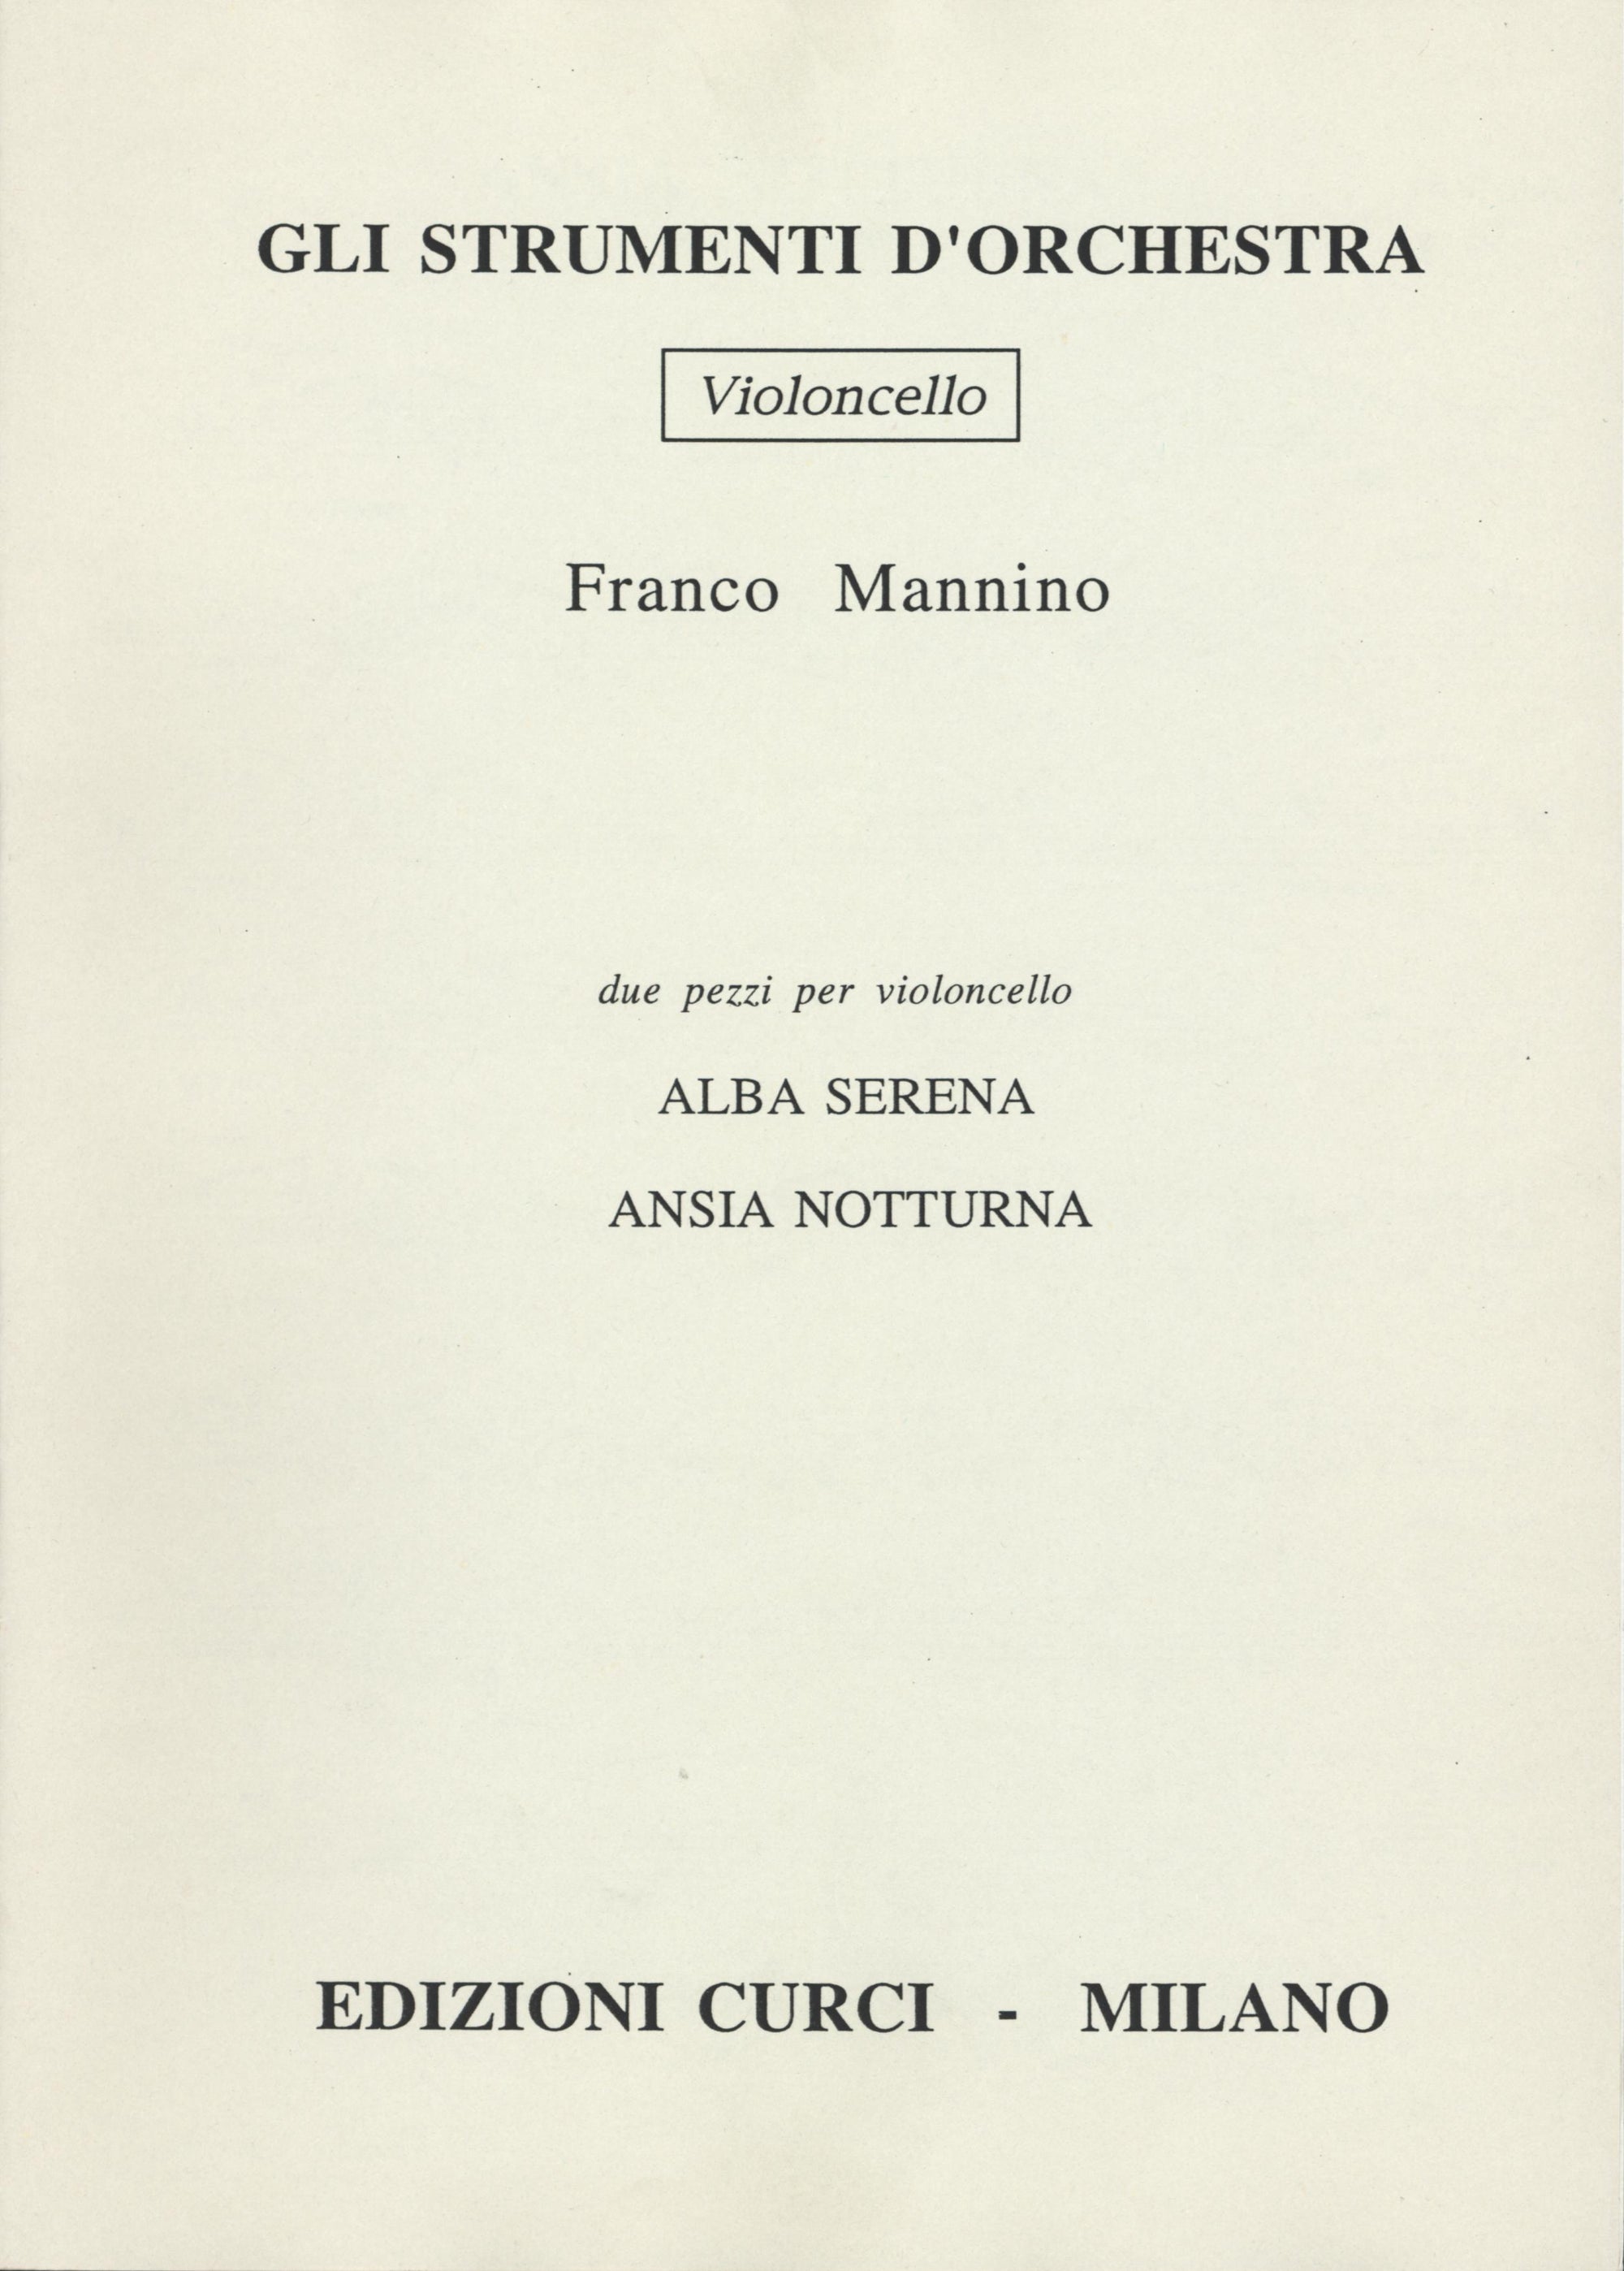 Mannino: Ansia notturna, Op. 367 and Alba serena, Op. 368